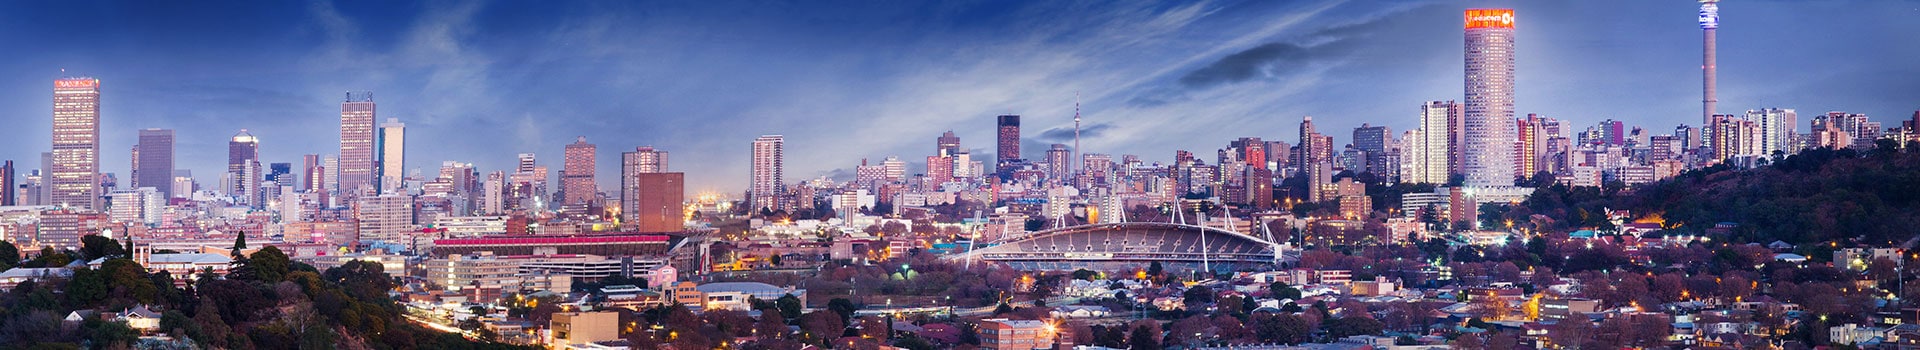 Valencia - Johannesburg